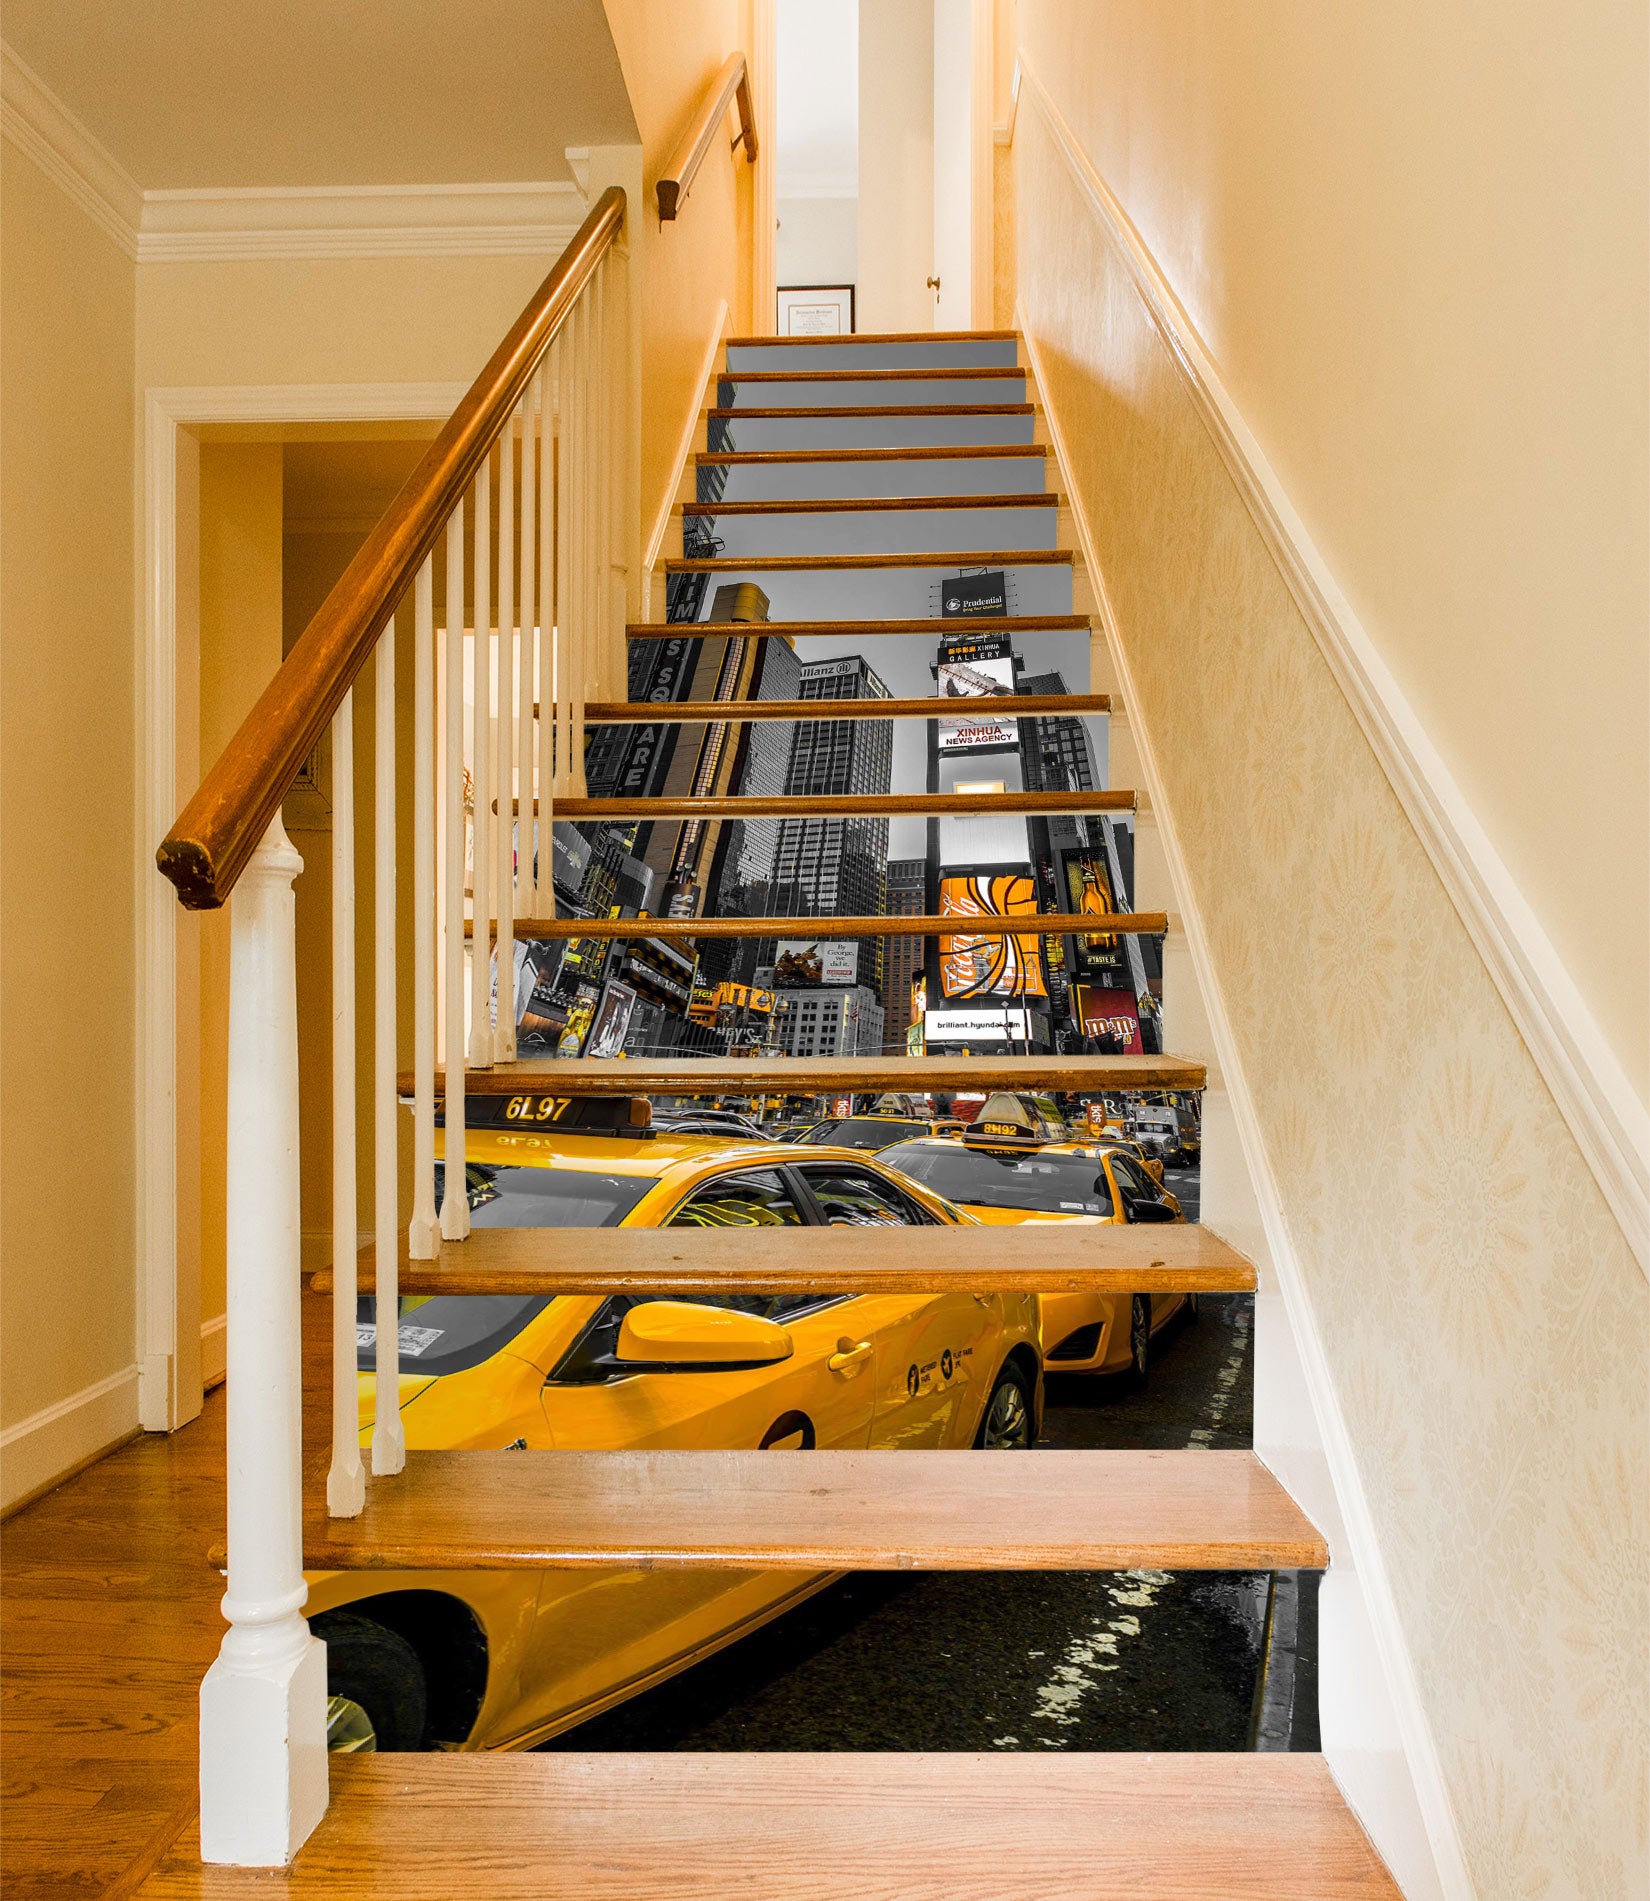 3D New York City 9989 Assaf Frank Stair Risers